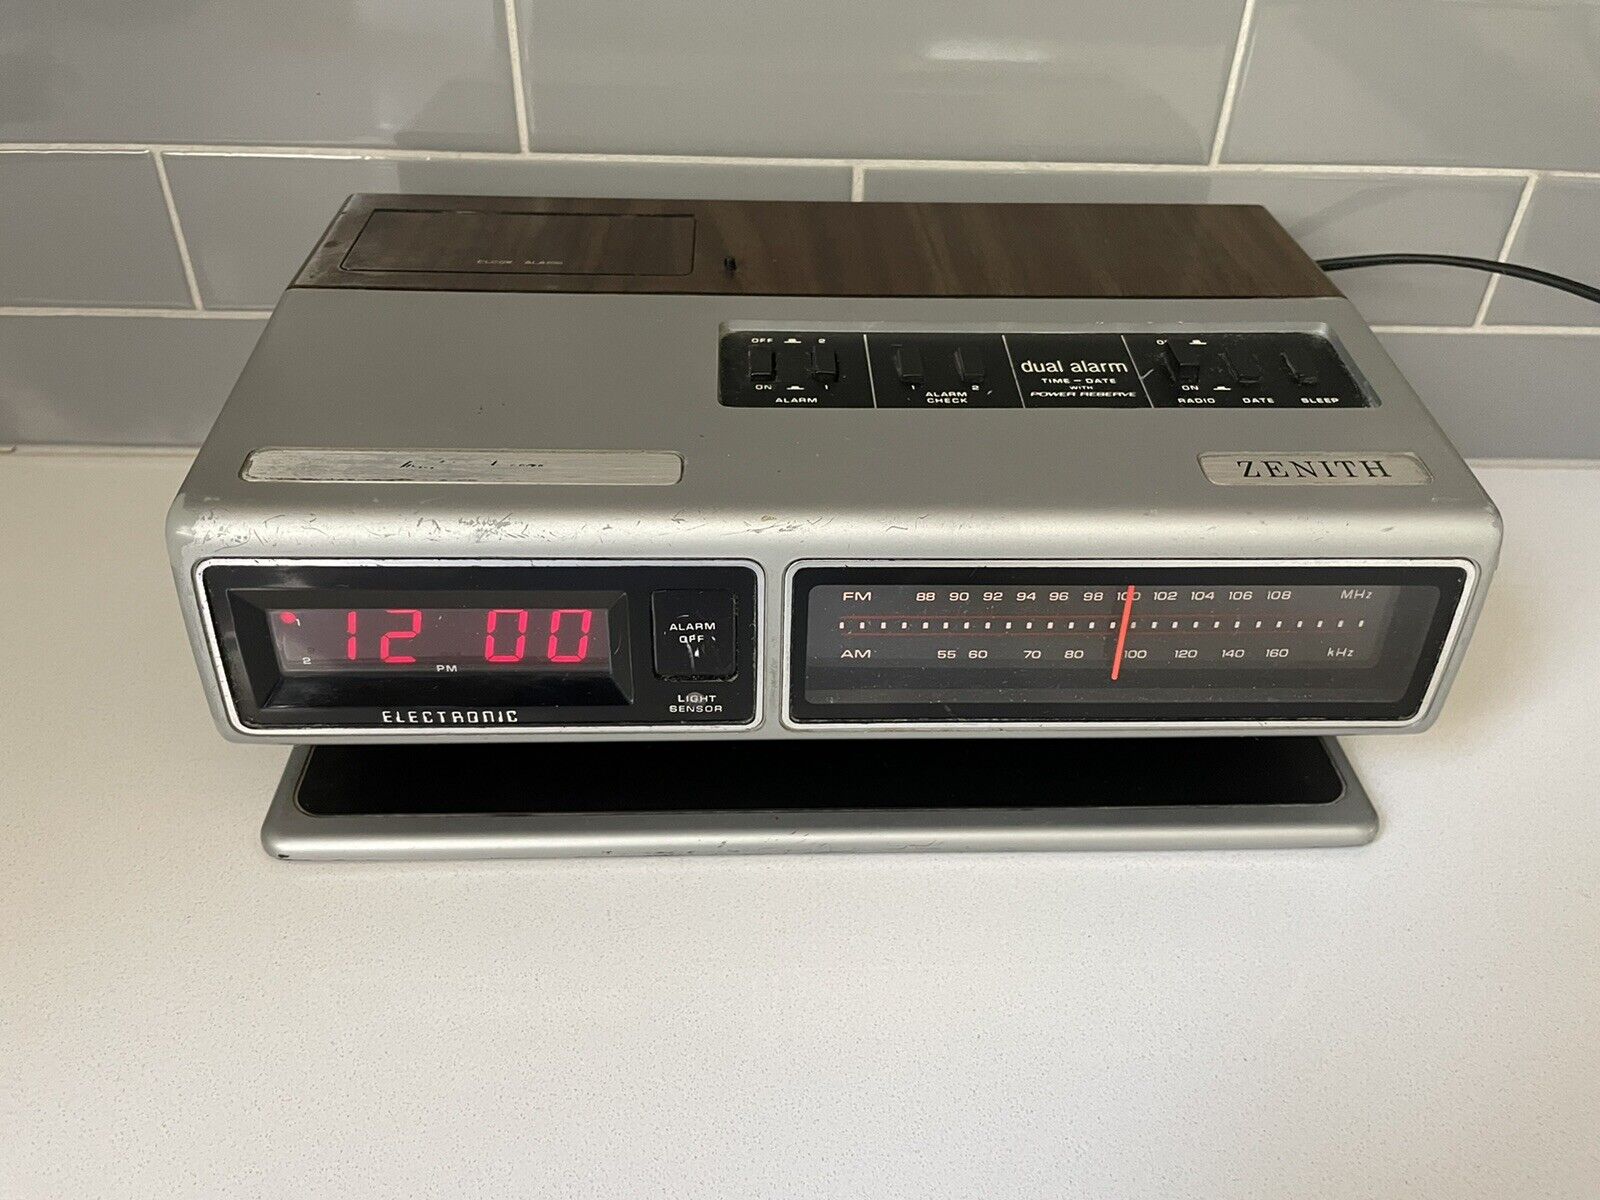 VIntage Zenith R476 Solid State AM FM Alarm Clock Radio Tested Works